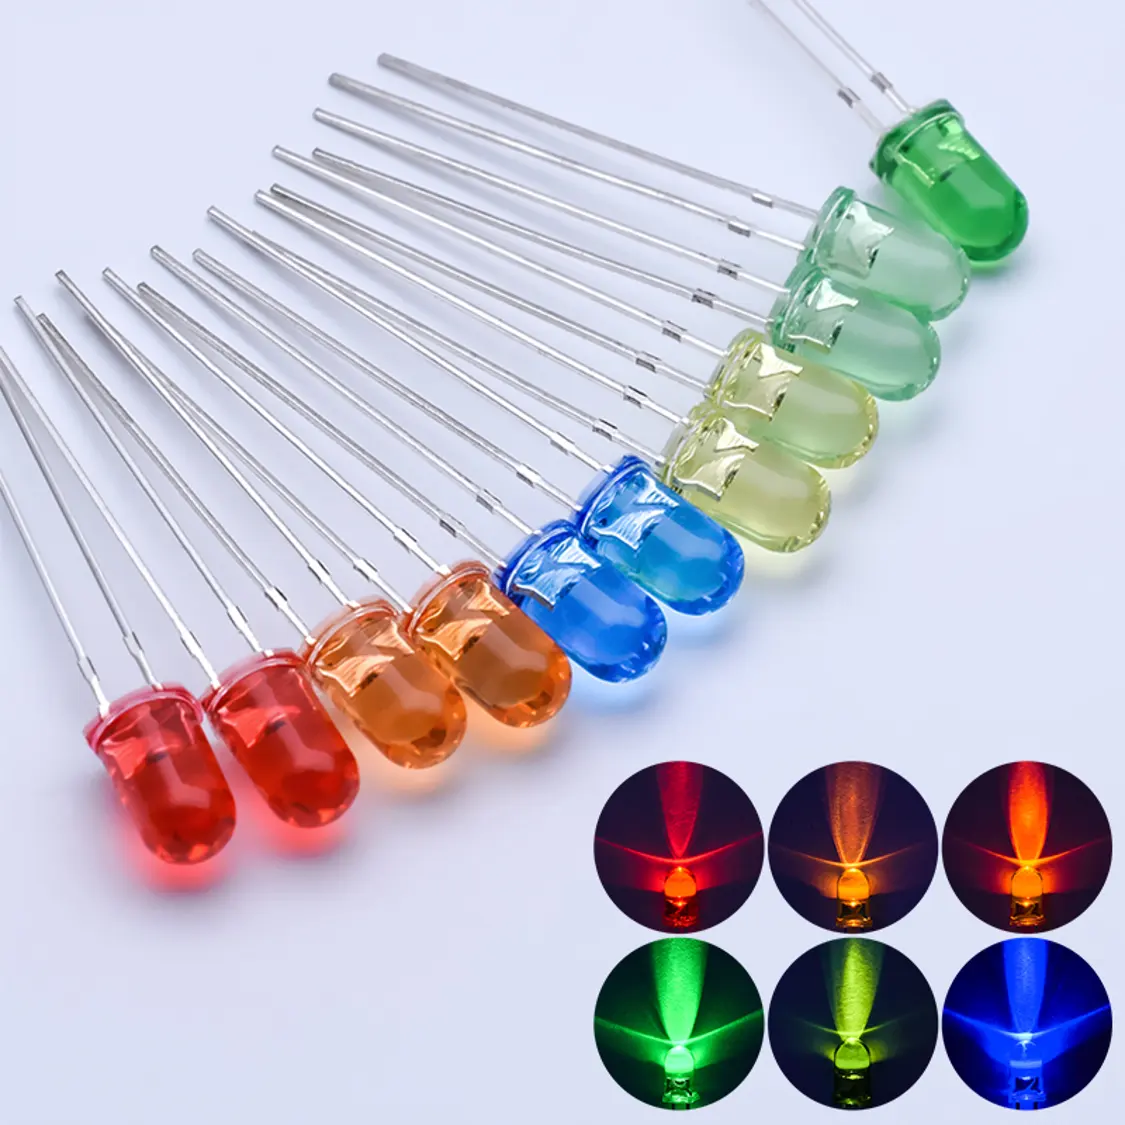 Signal lumineux F5 — Diode LED cristal, couleur Semi-transparente, rouge, vert, bleu, Orange, blanc, jaune, fabrication d'origine, 5mm